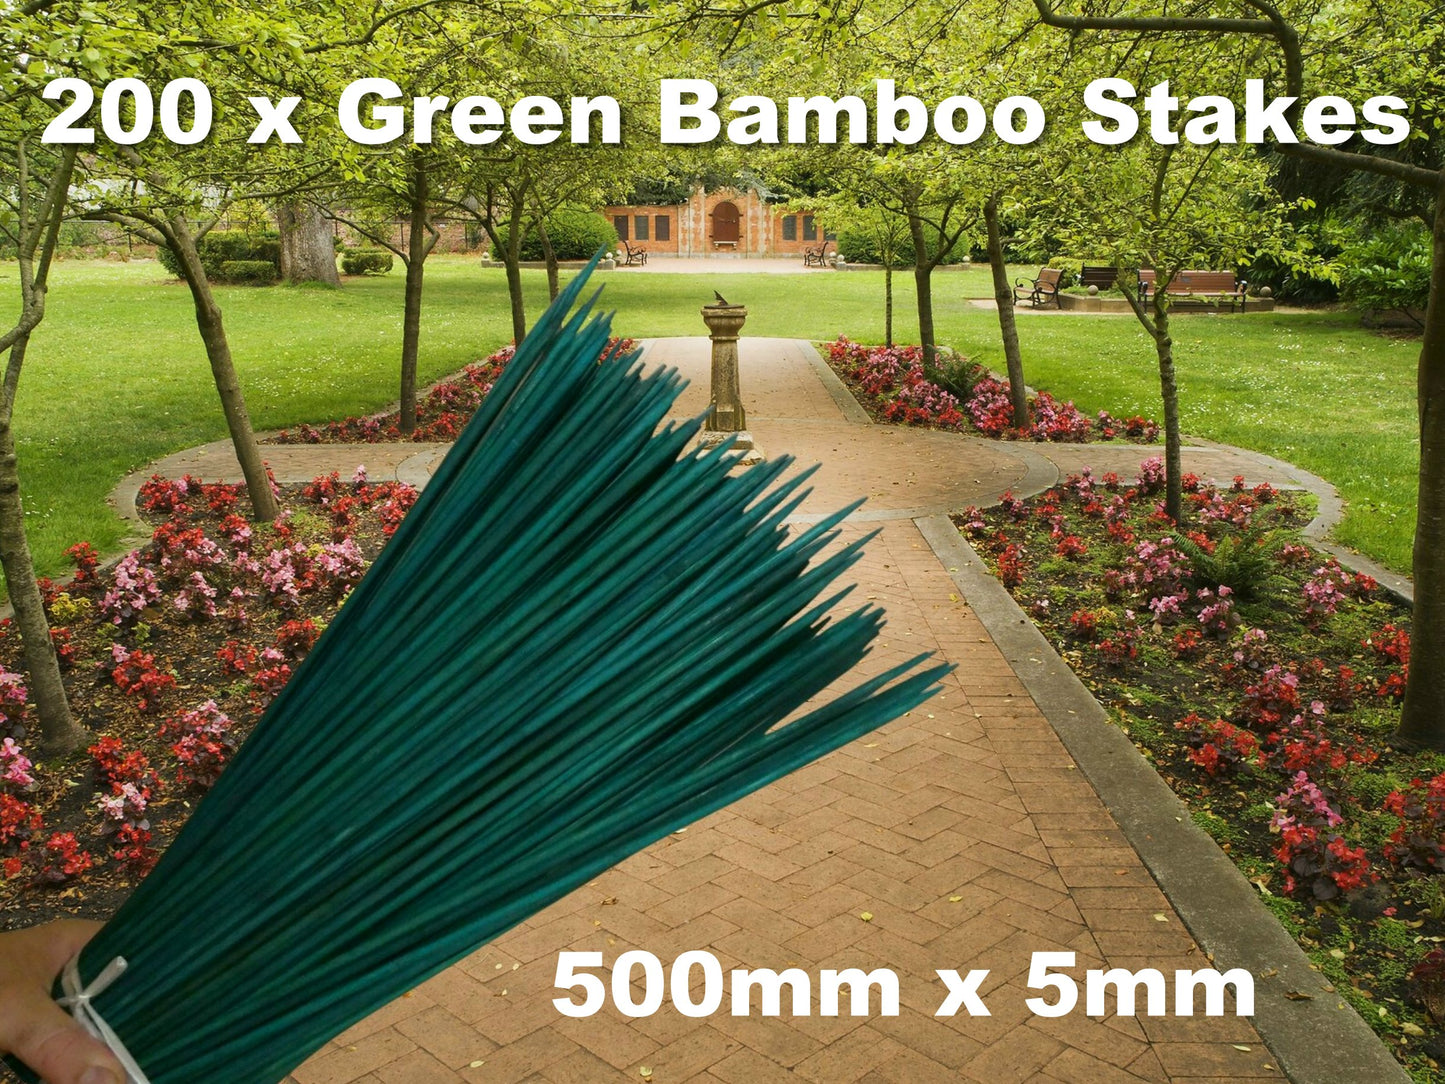 Skewers 500mm x 5mm Bamboo Garden Seedling Sticks Stakes Green Waxed x 200 Australia